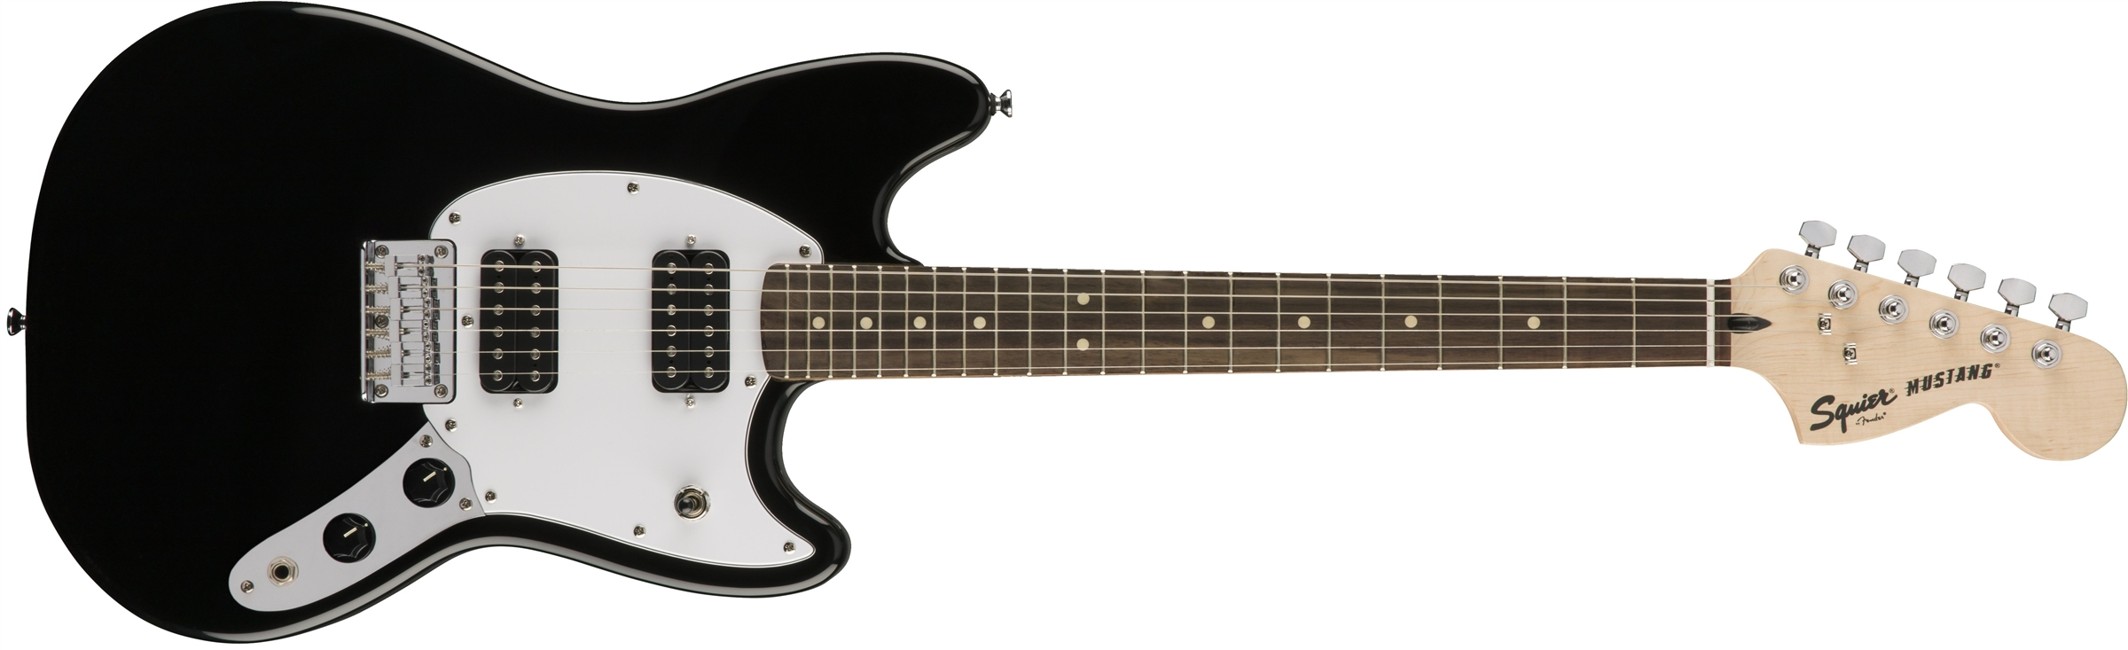 Squier By Fender - Bullet Mustang HH - Elektrisk Guitar (Black)